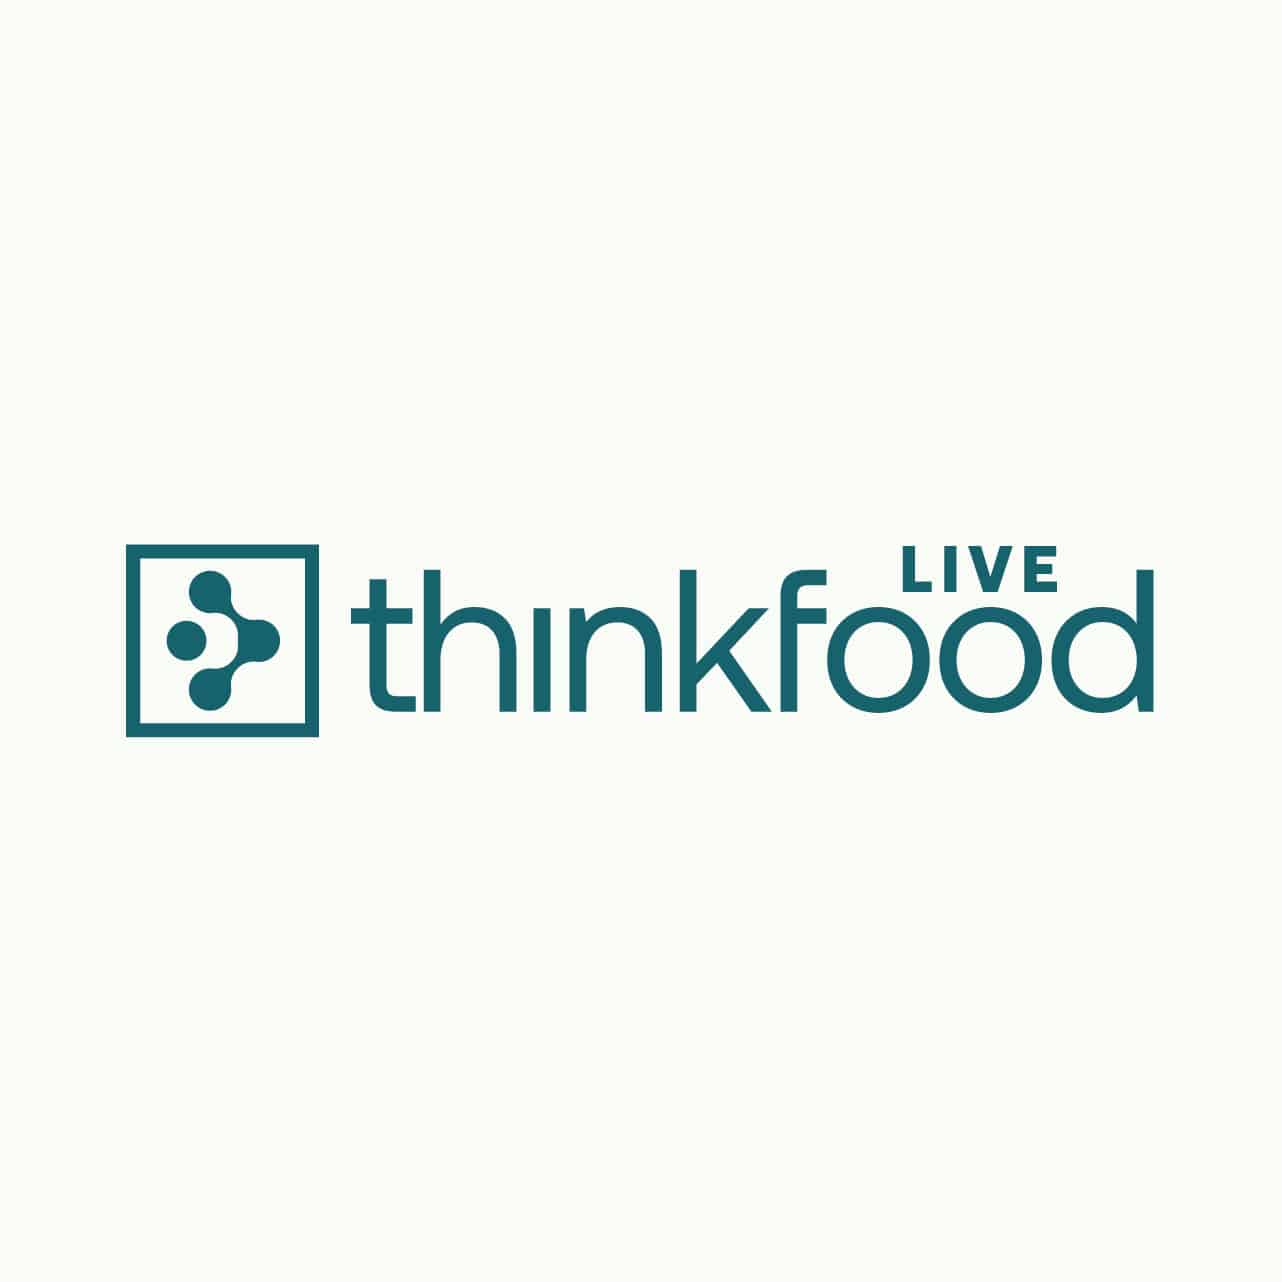 thinkfood LIVE